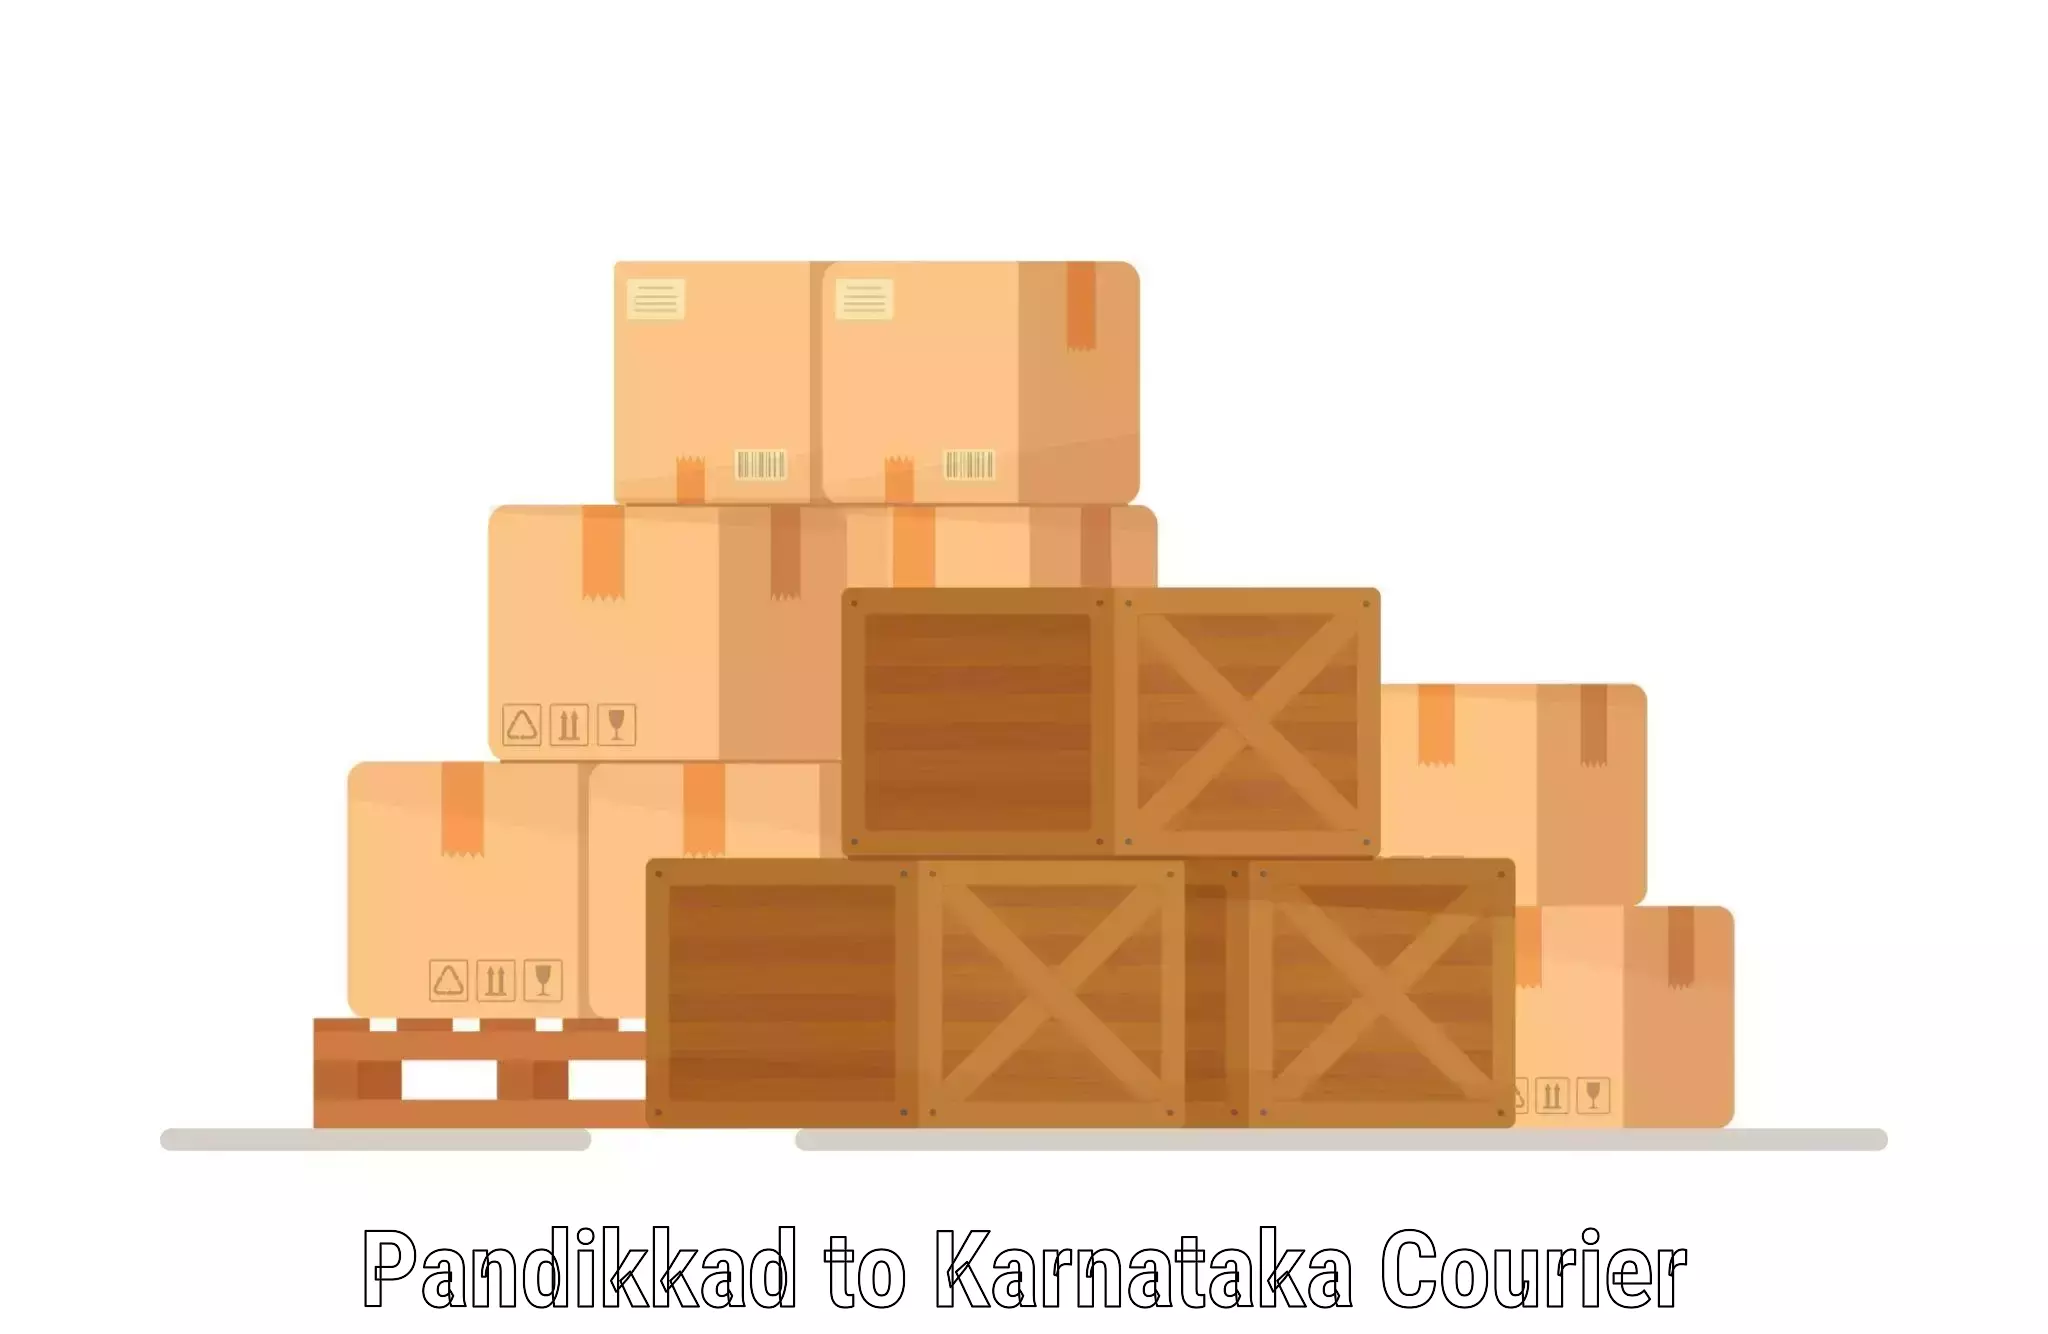 Supply chain delivery Pandikkad to Kalaburagi